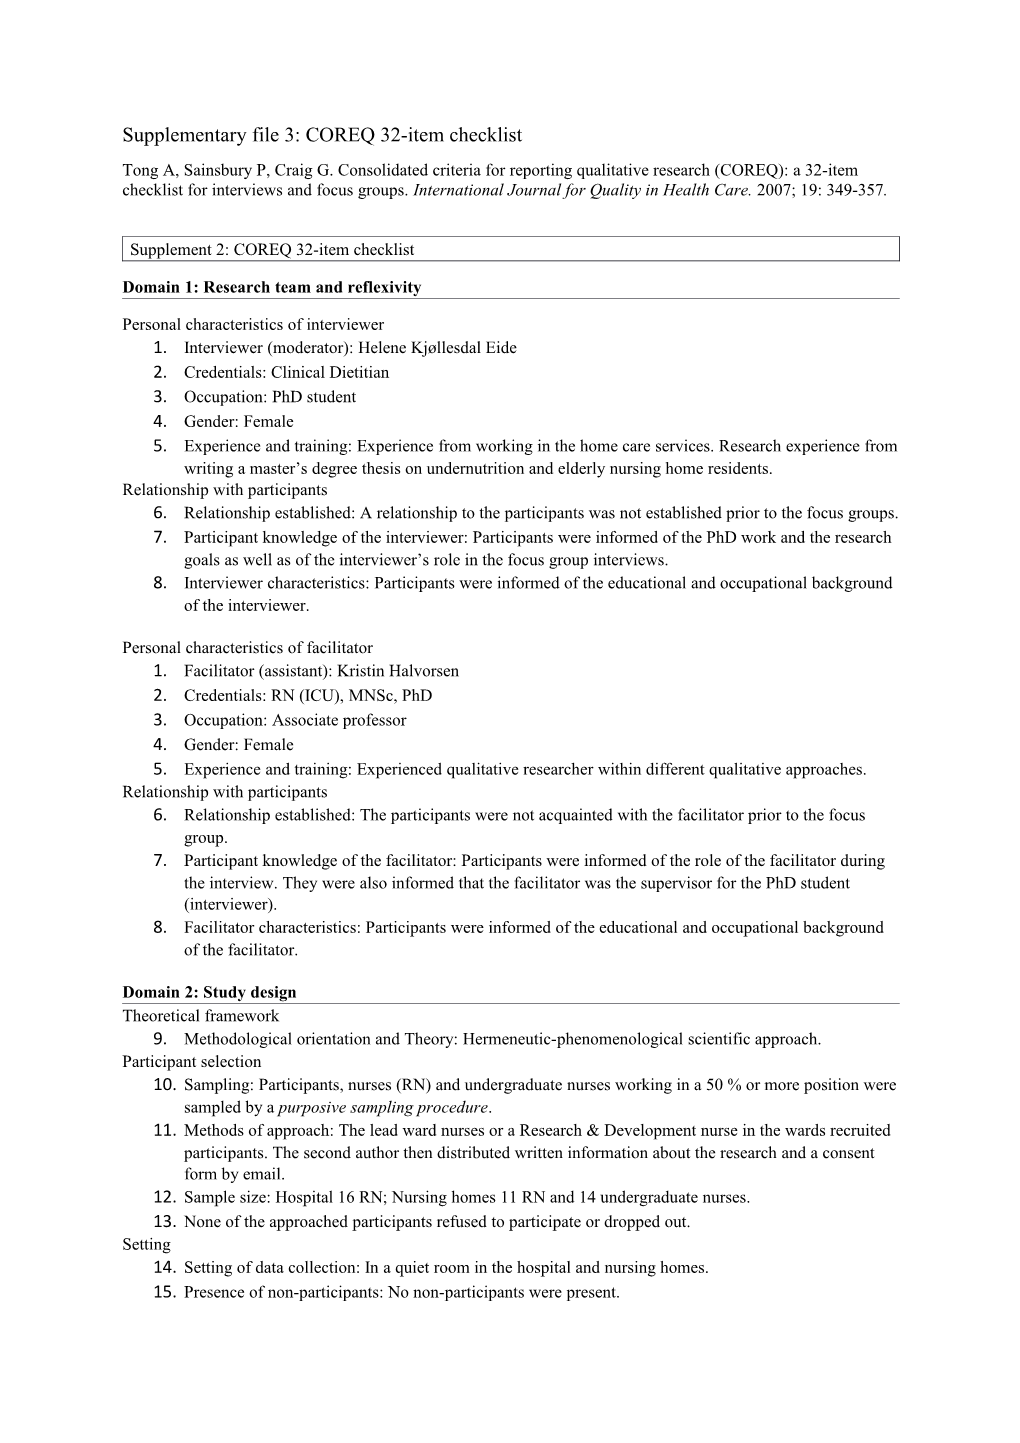 Supplementary File 3: COREQ 32-Item Checklist